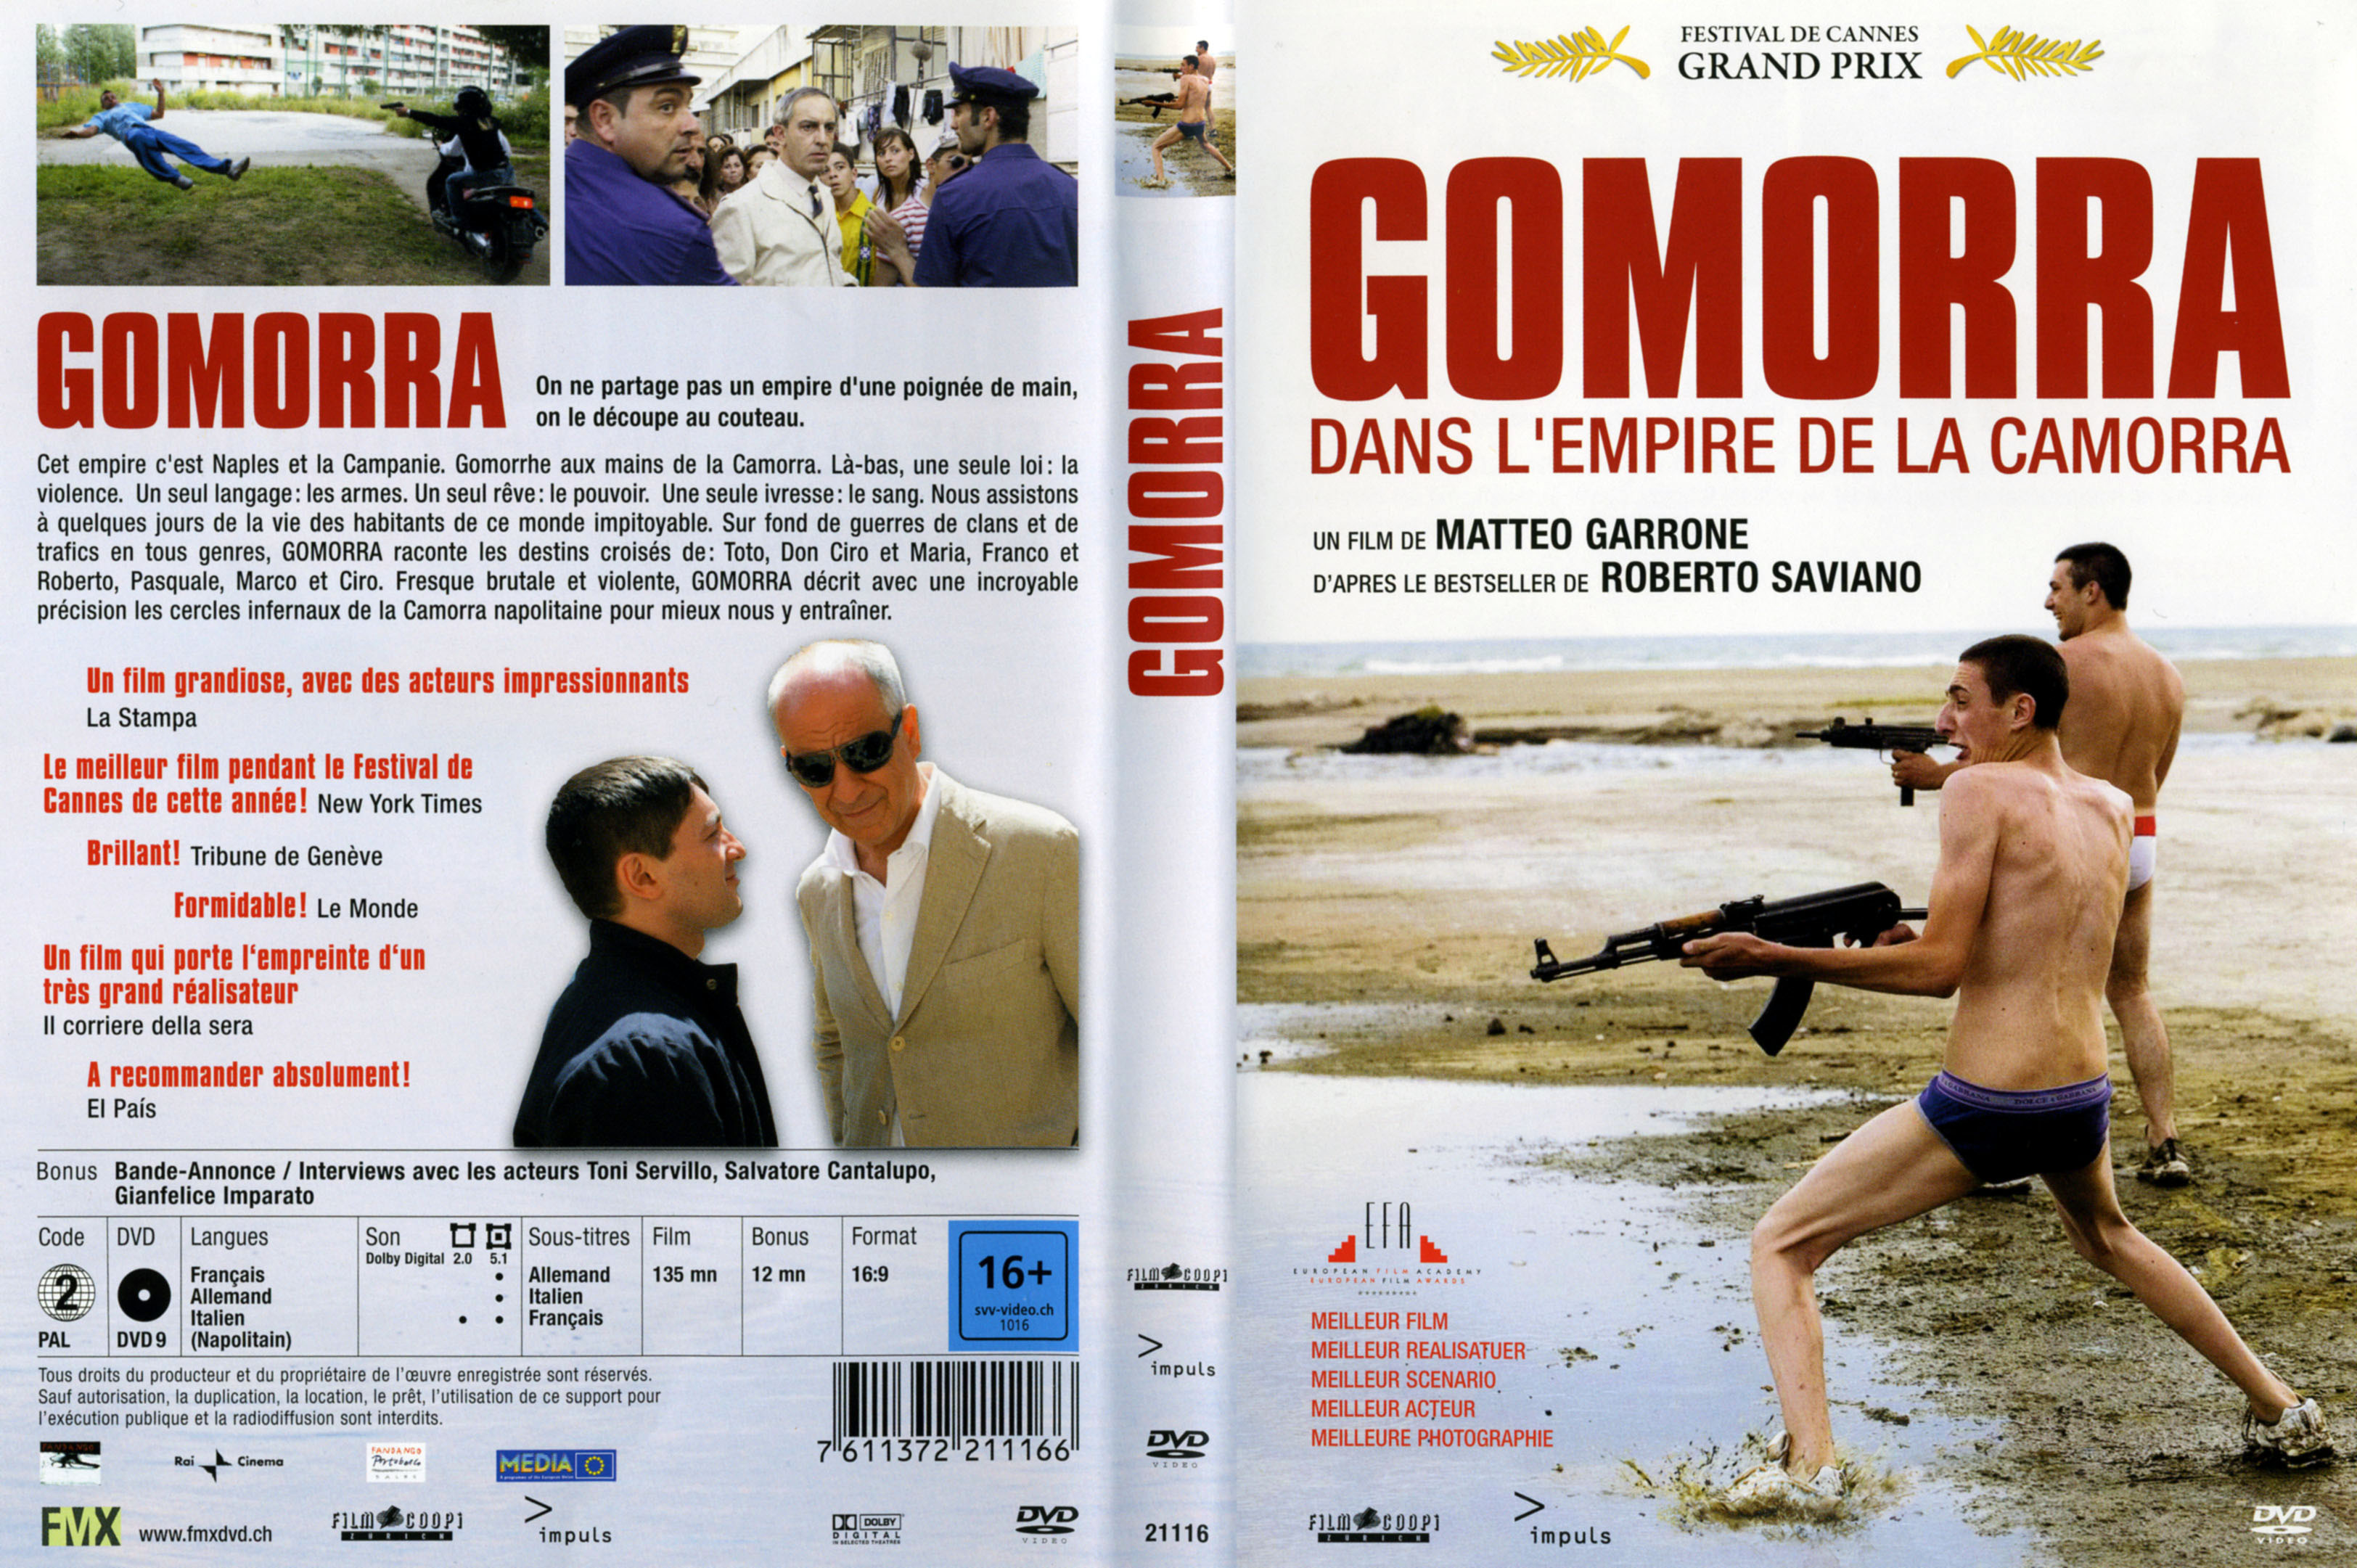 Jaquette DVD Gomorra v2